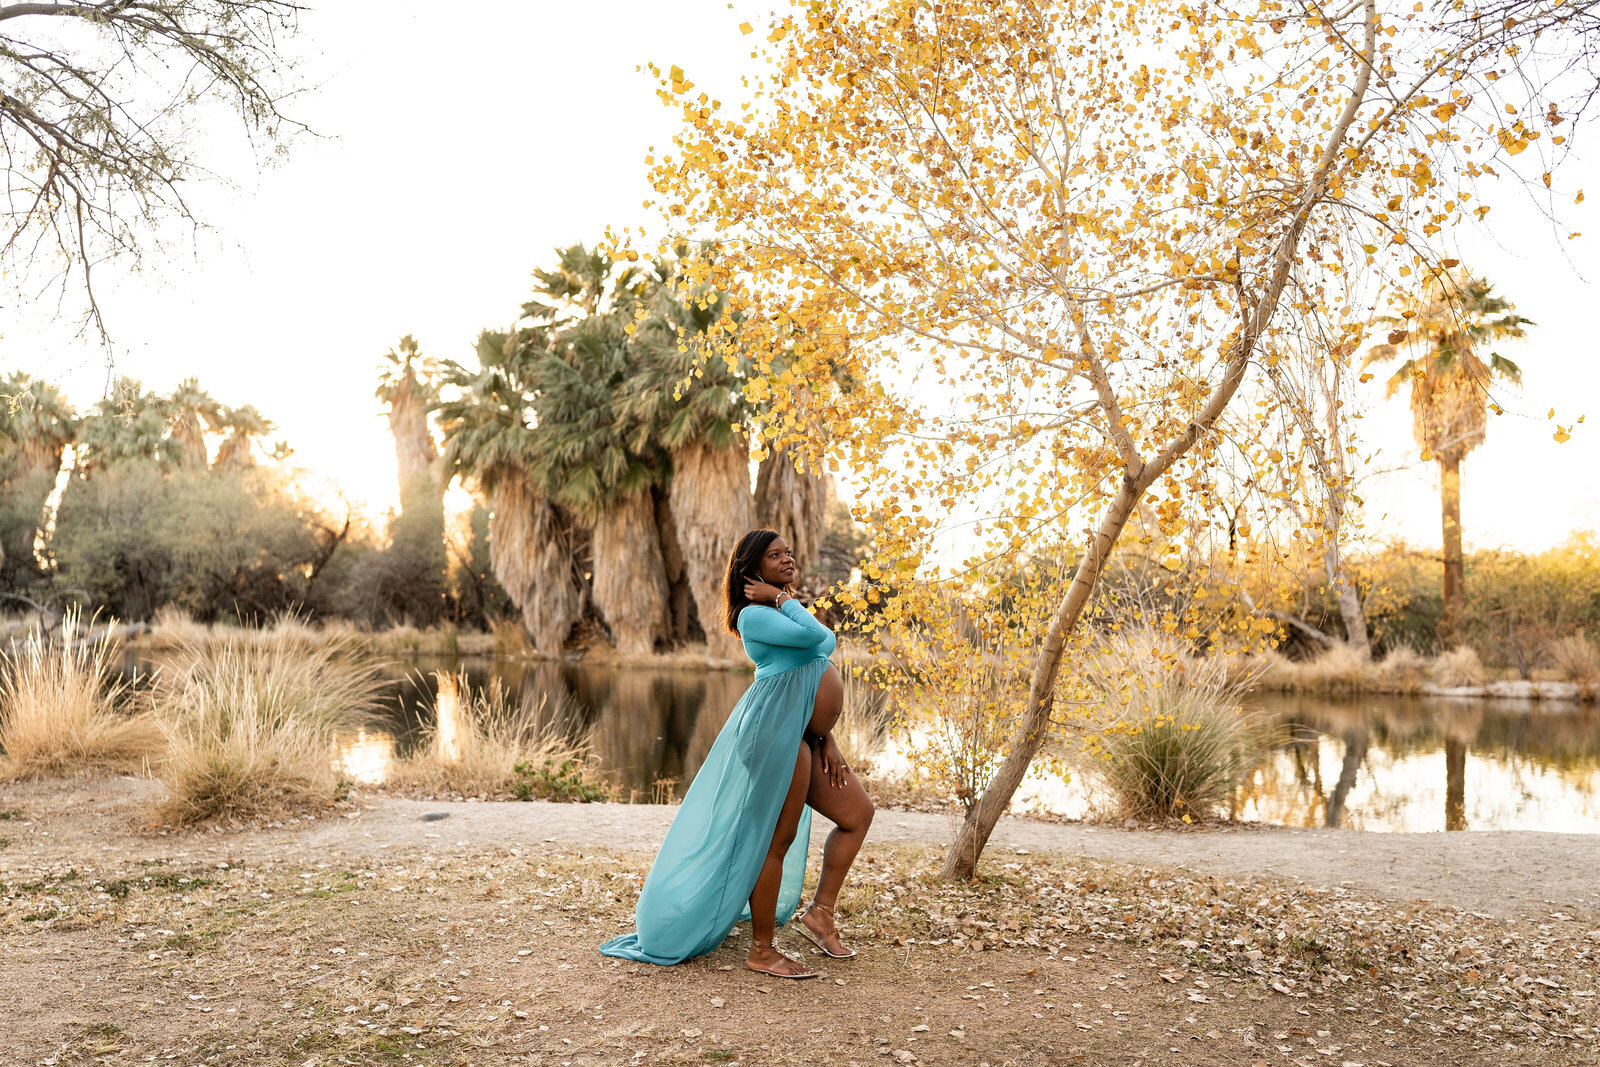 Agua Caliente maternity photo shoot in Tucson, Arizona taken by Kalena Photography